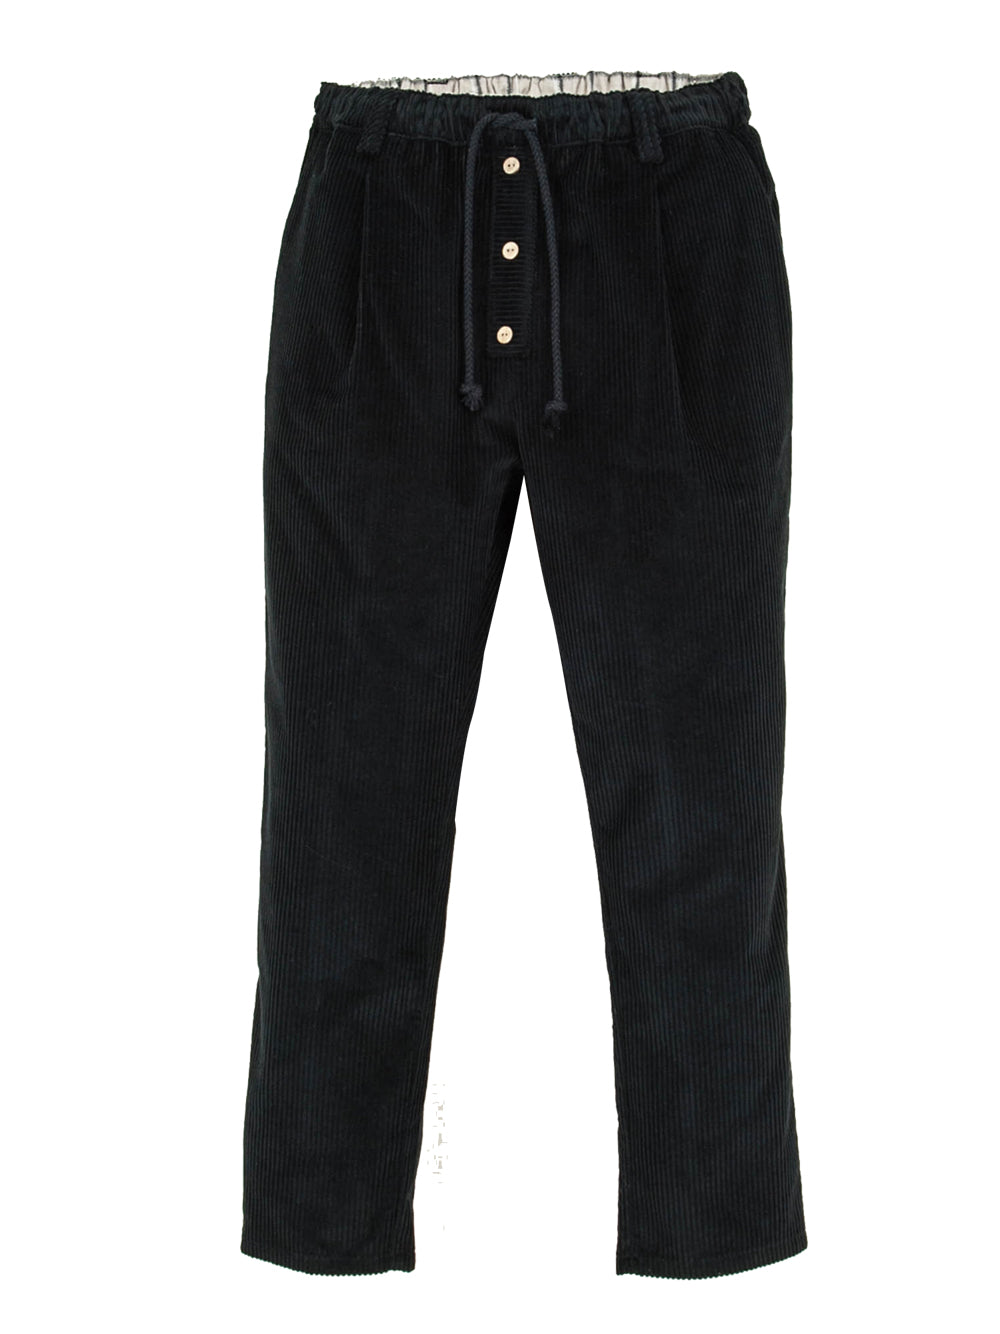 Black Corduroy Cotton Trousers